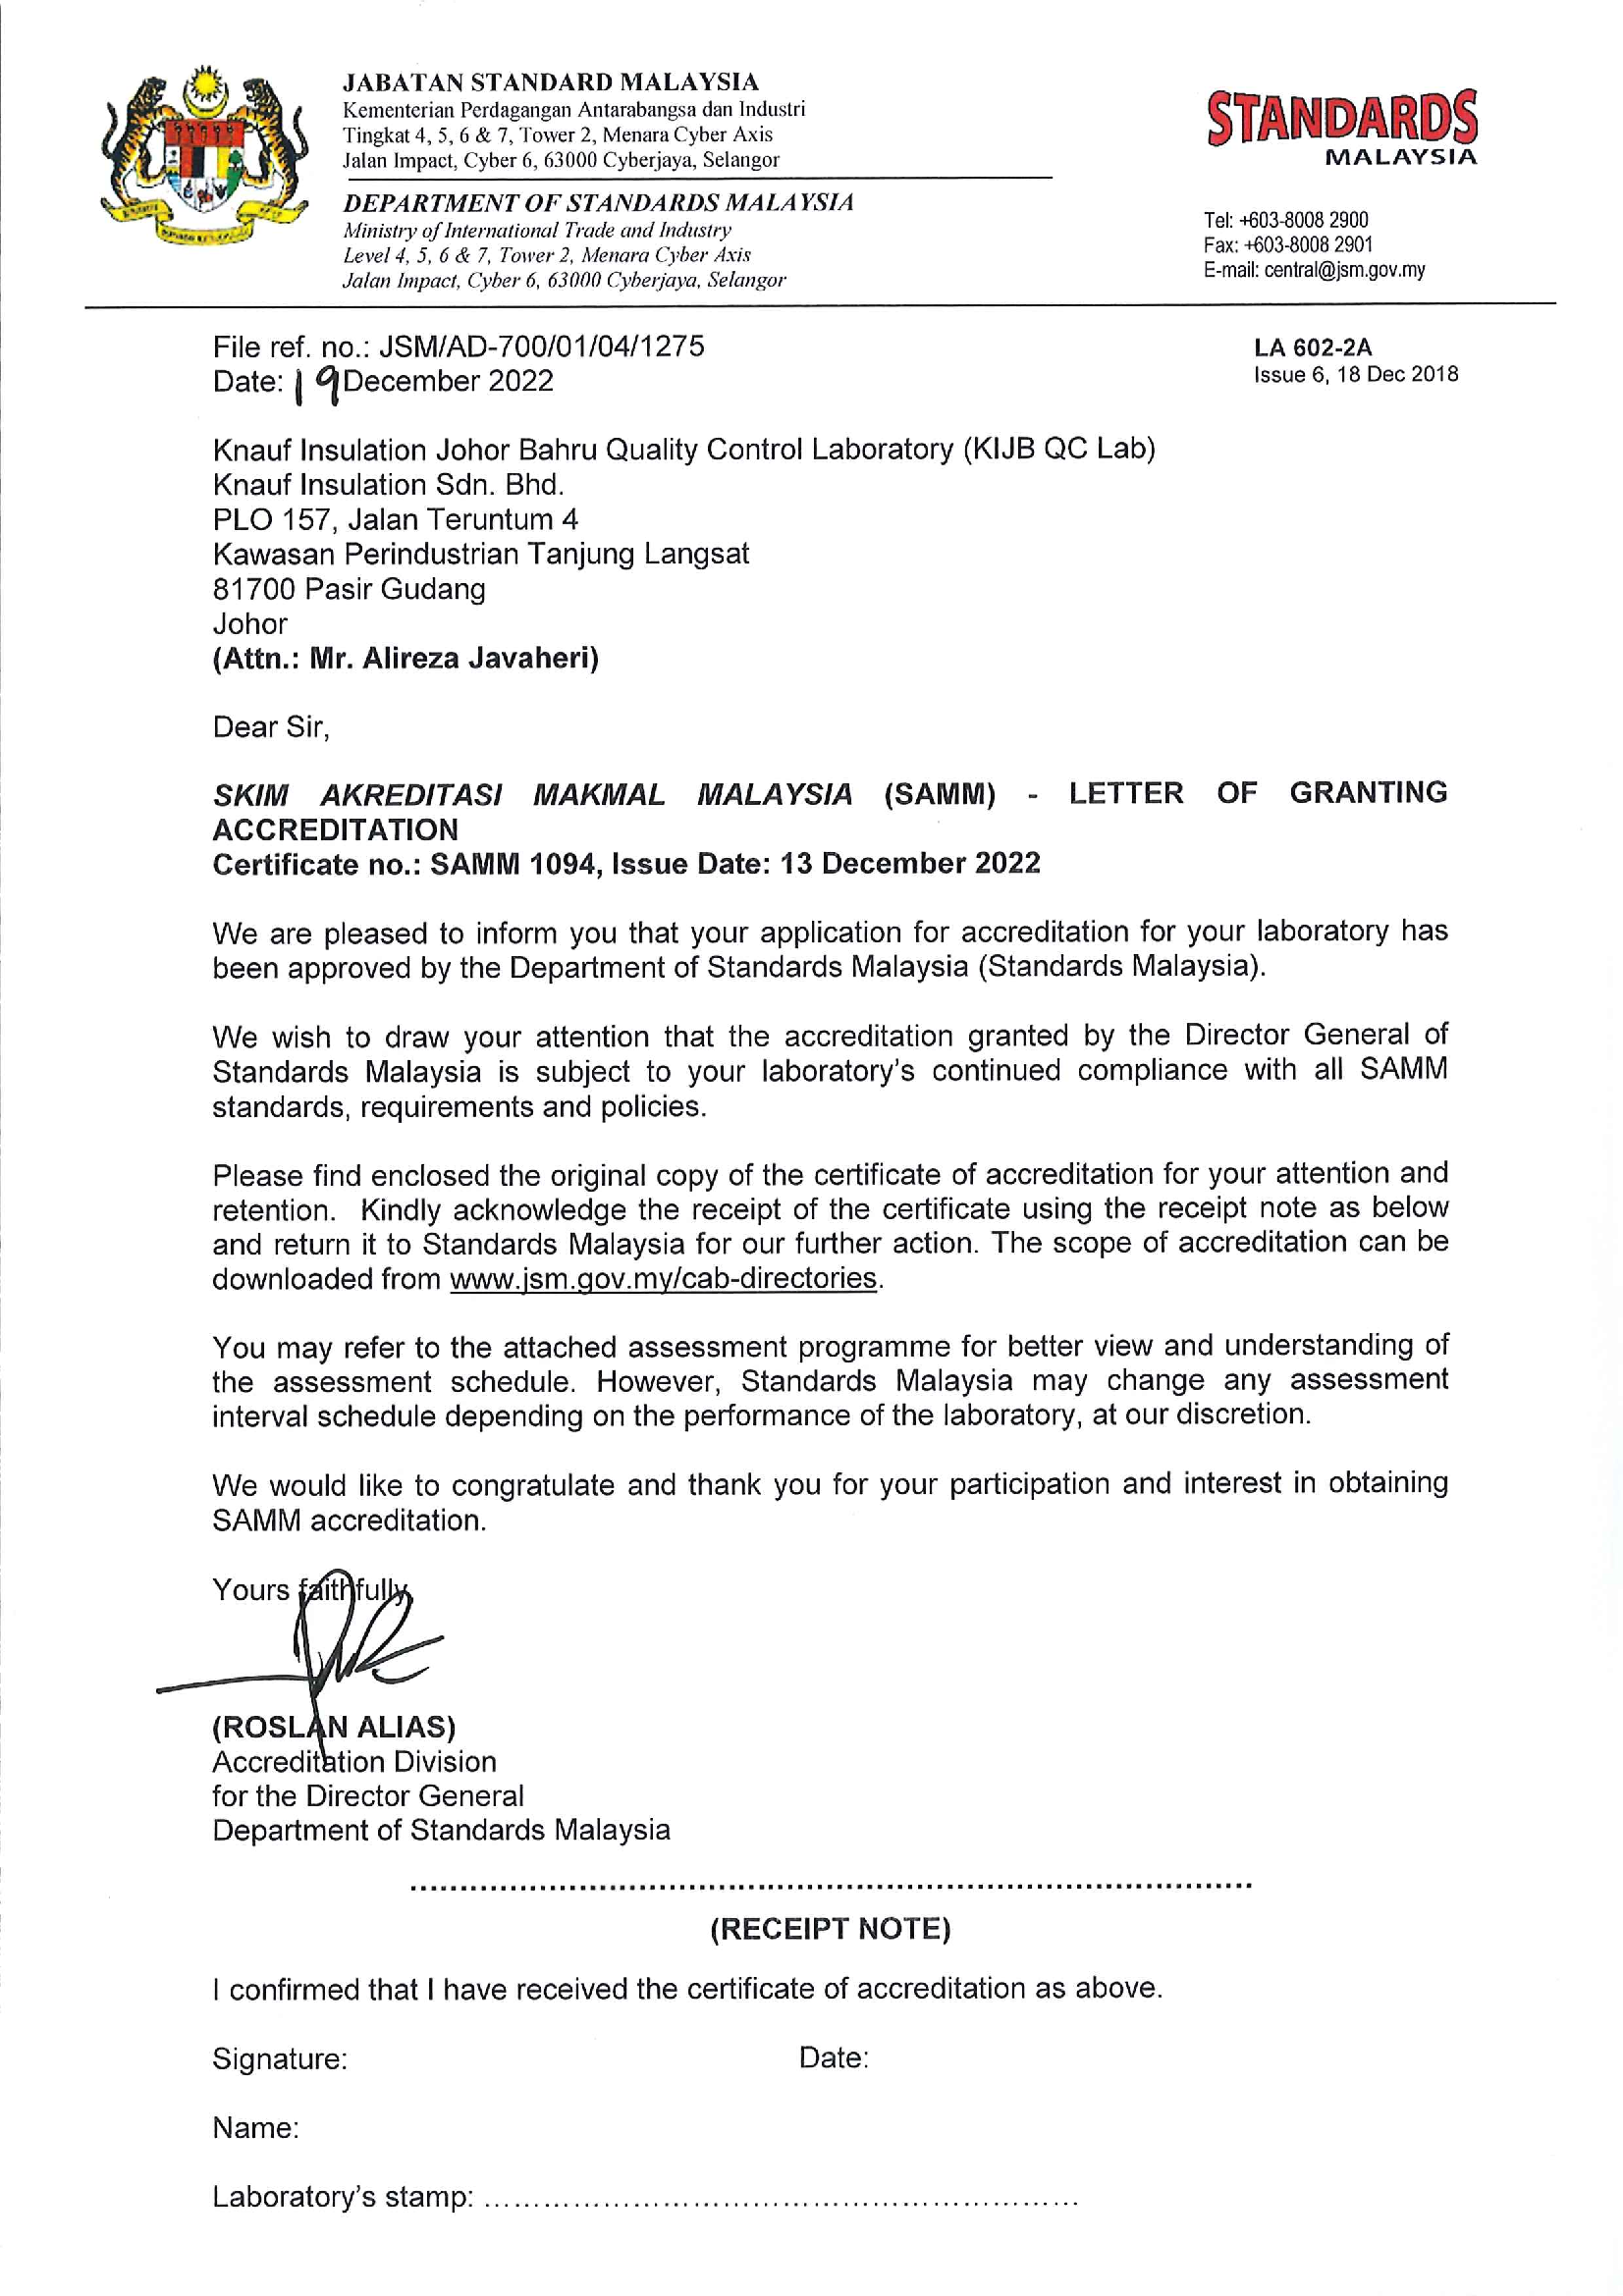 Standards Malaysia - KIJB QC LAB Certificate of Accreditation